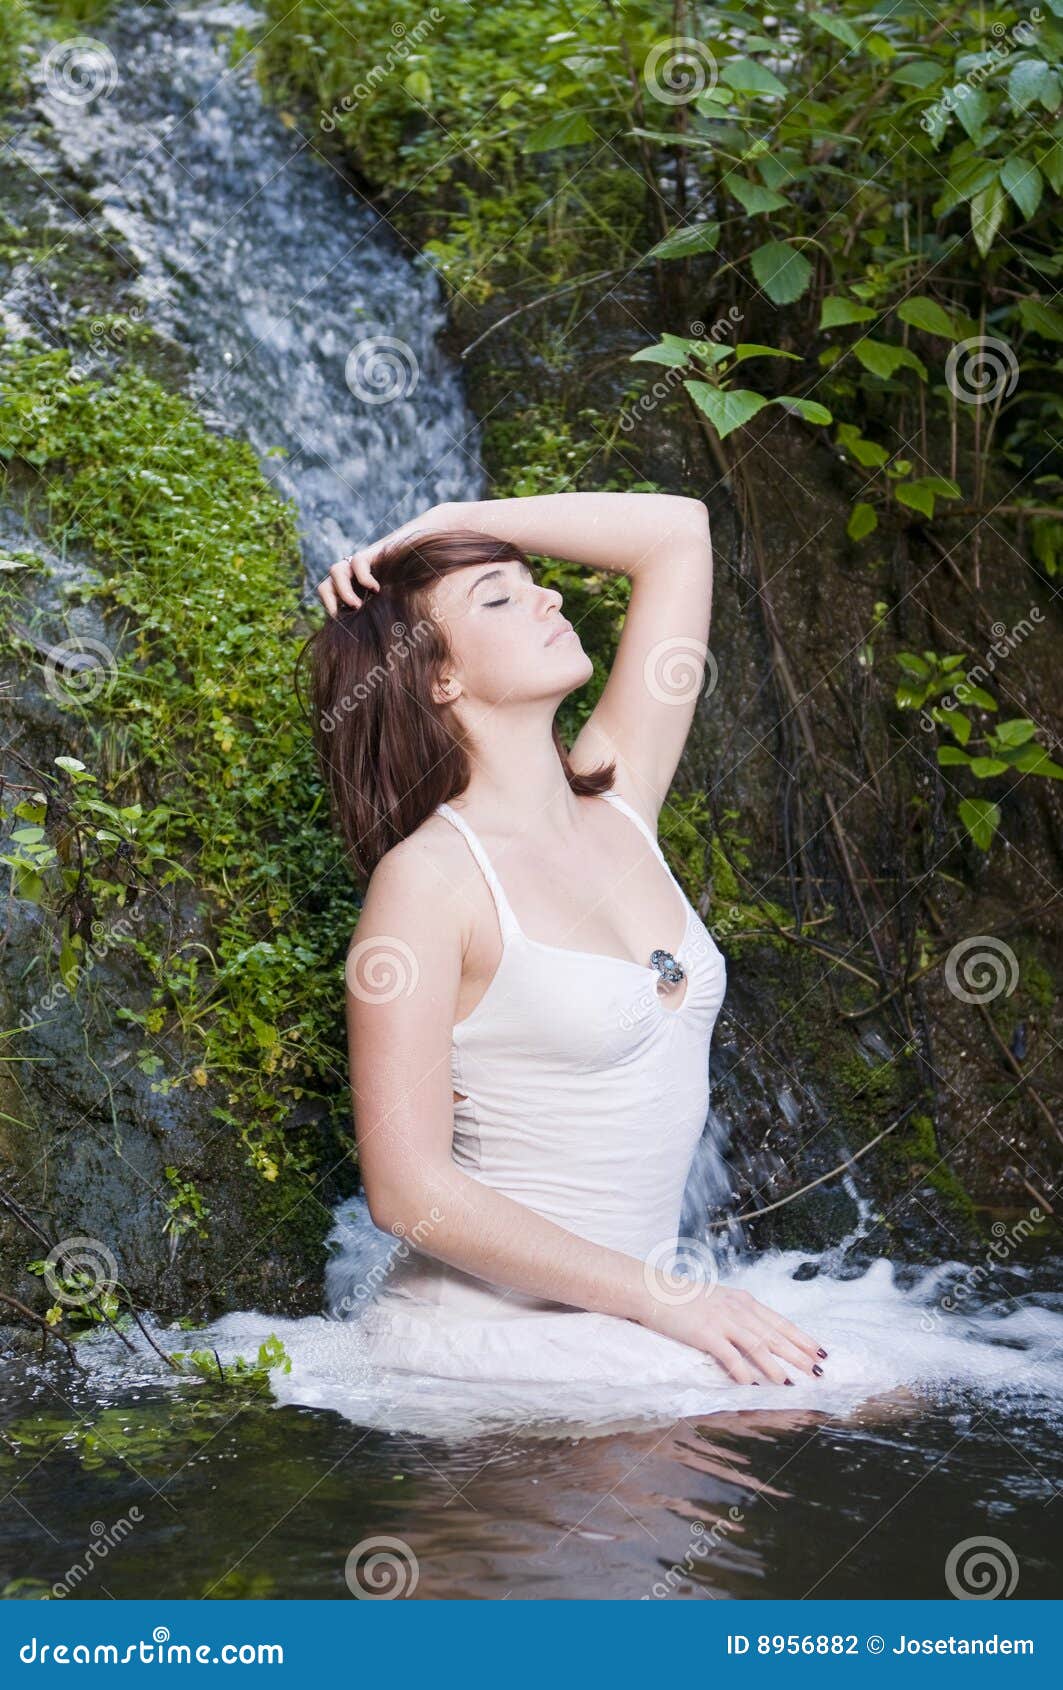 cj wiegand share women bathing in waterfalls photos